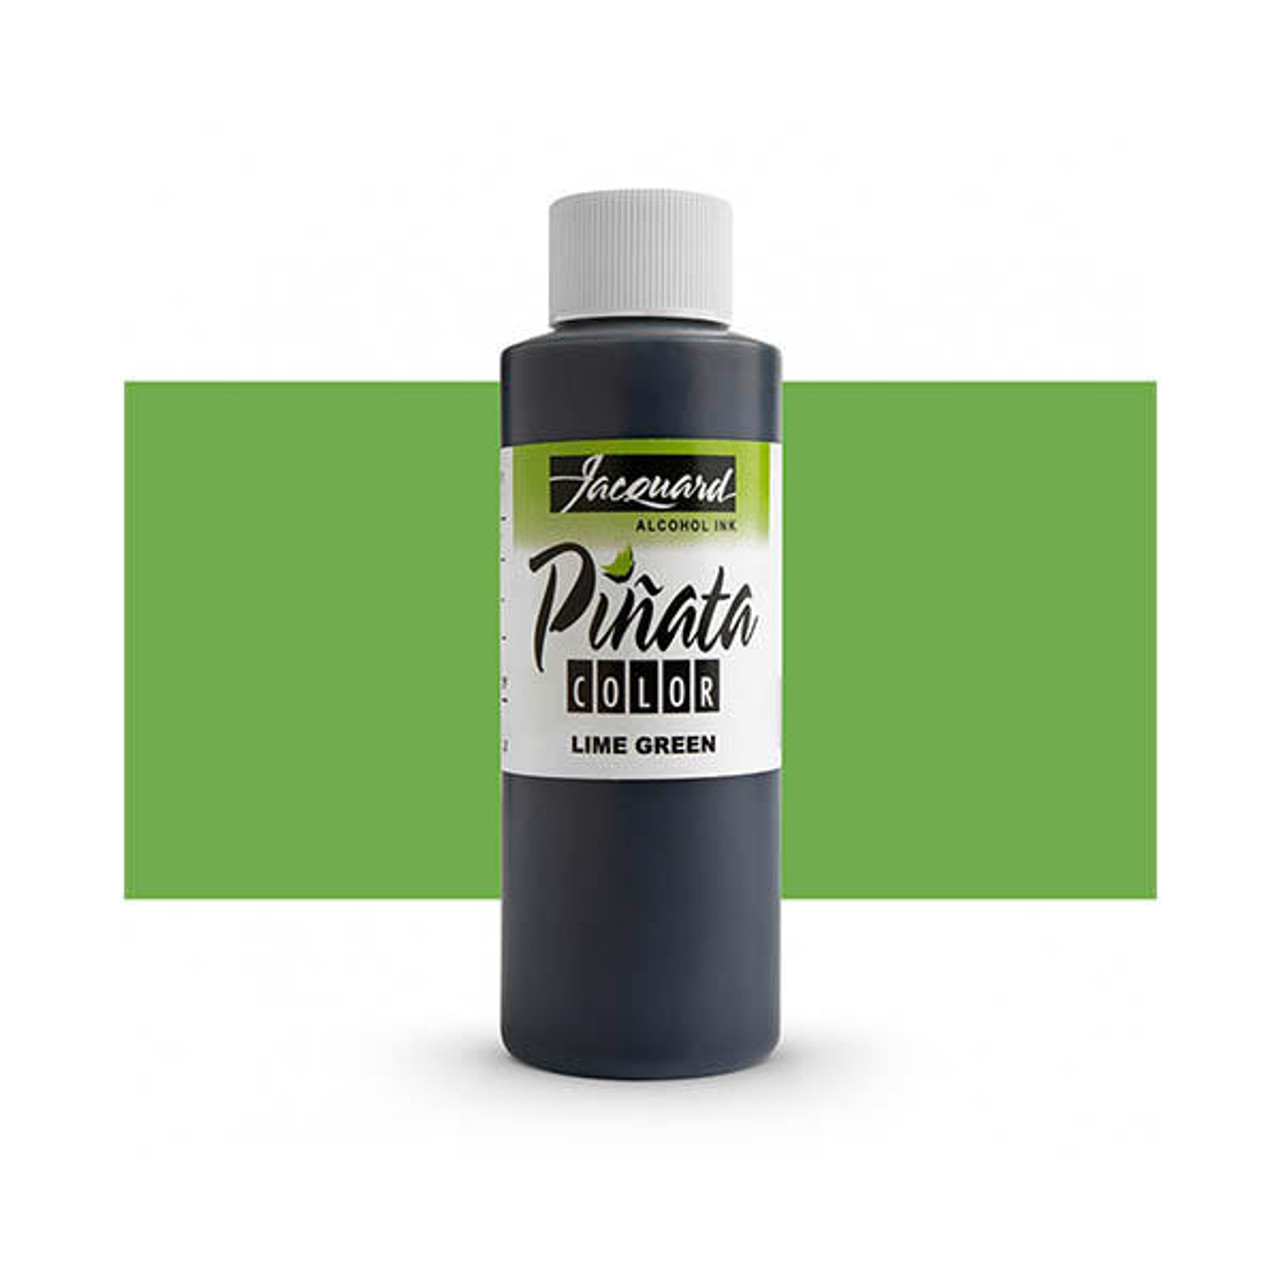 Pinata Alcohol Ink - Lime Green - 4oz